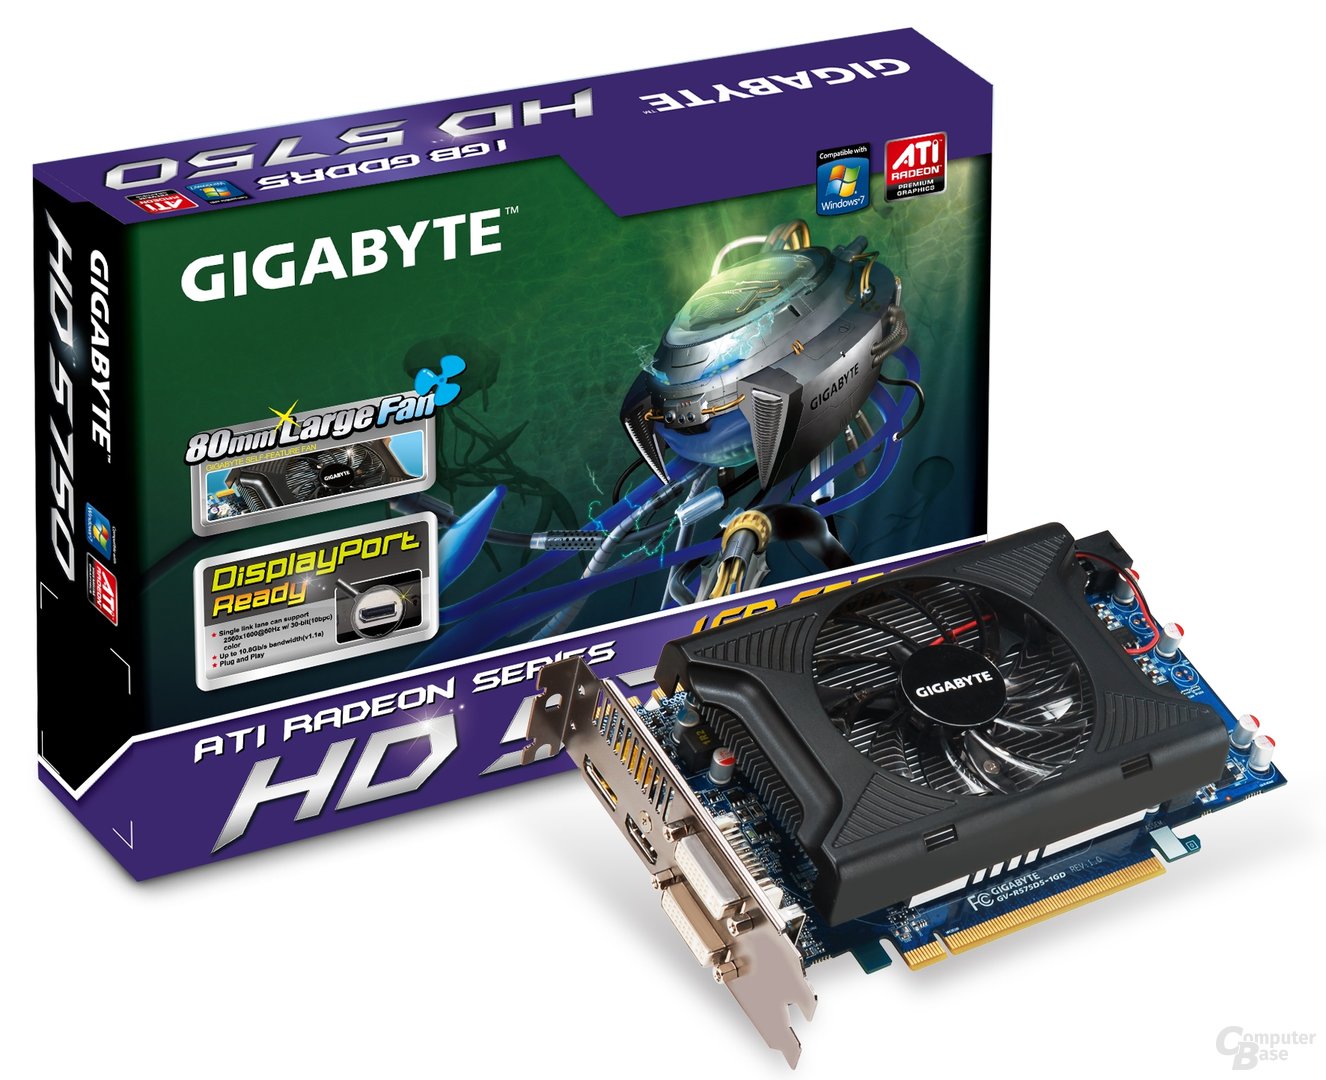 Gigabyte Radeon HD 5750